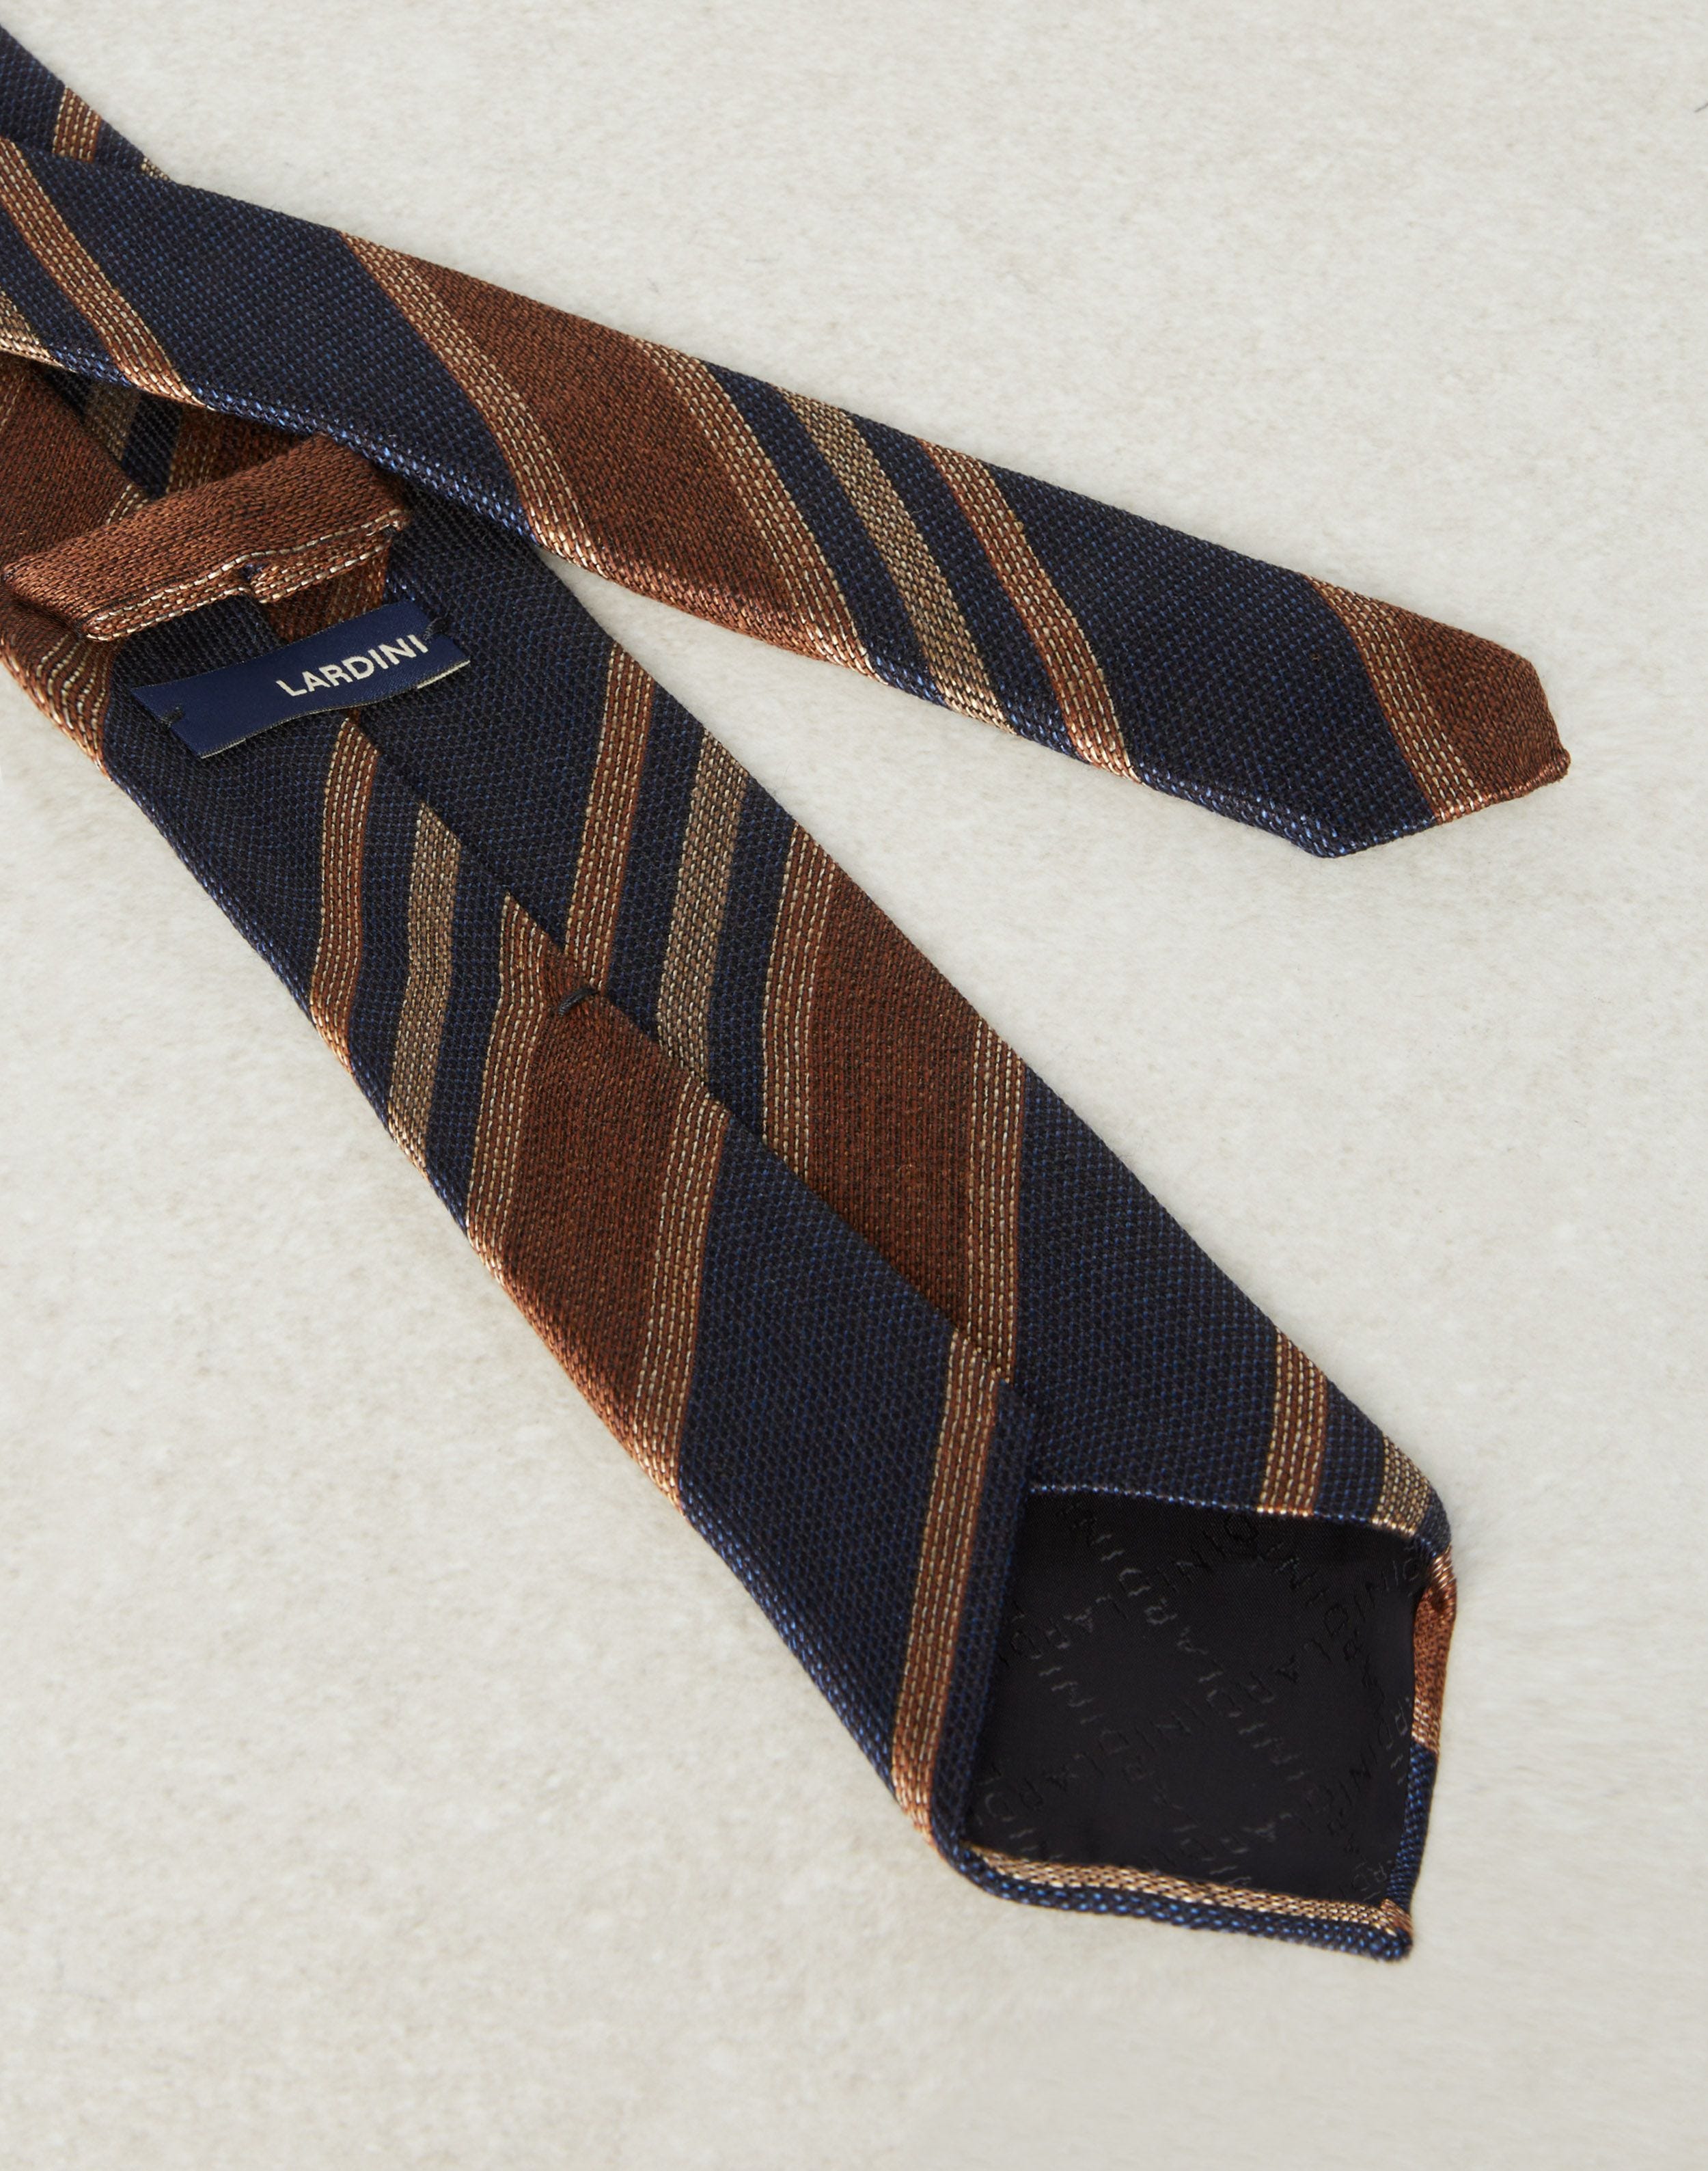 Regimental tie in blue-and-beige cotton, wool and silk